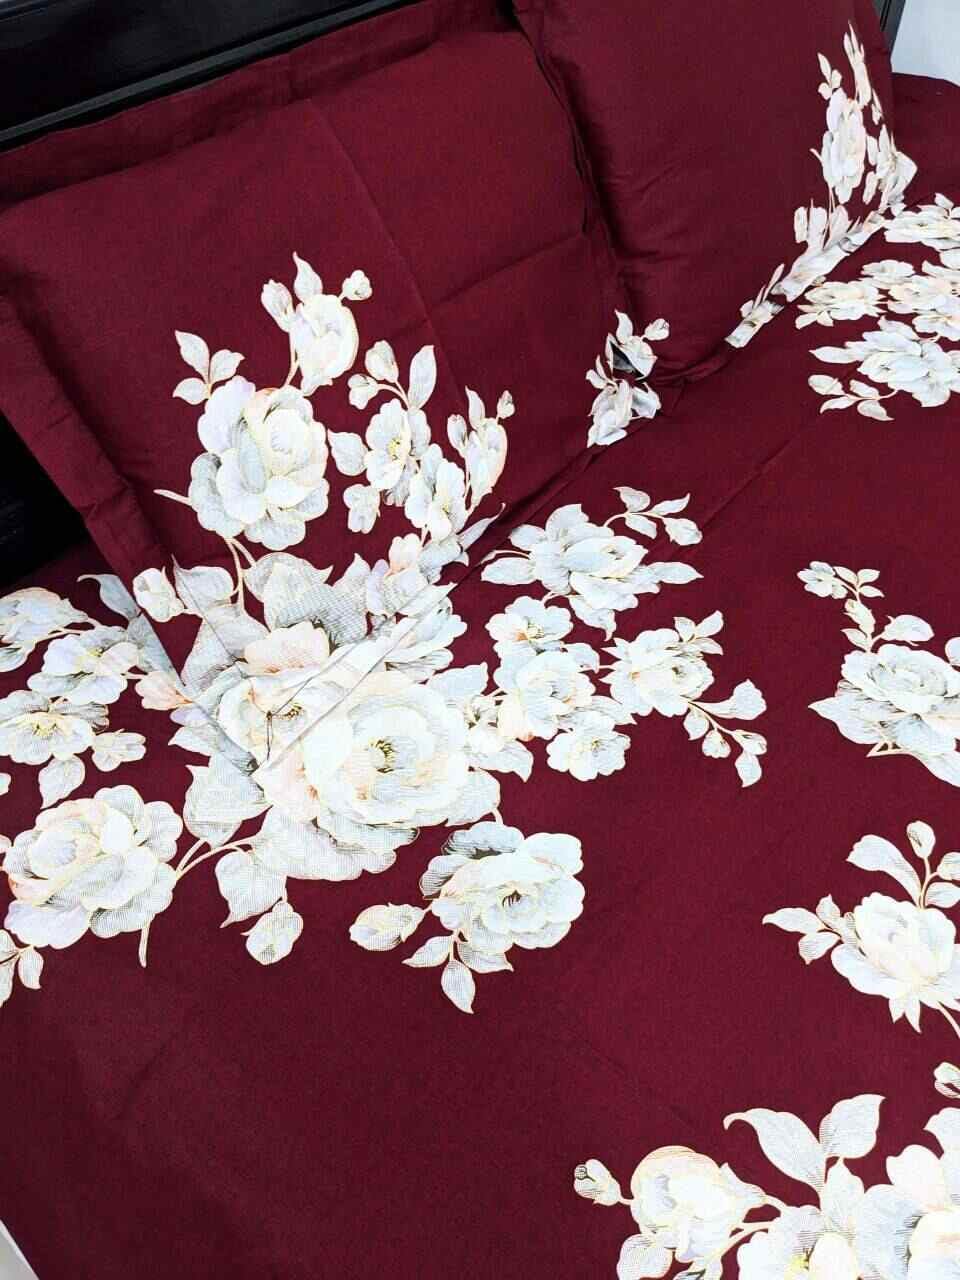 Redcolor bedsheets  (৩ পিসের সেট)